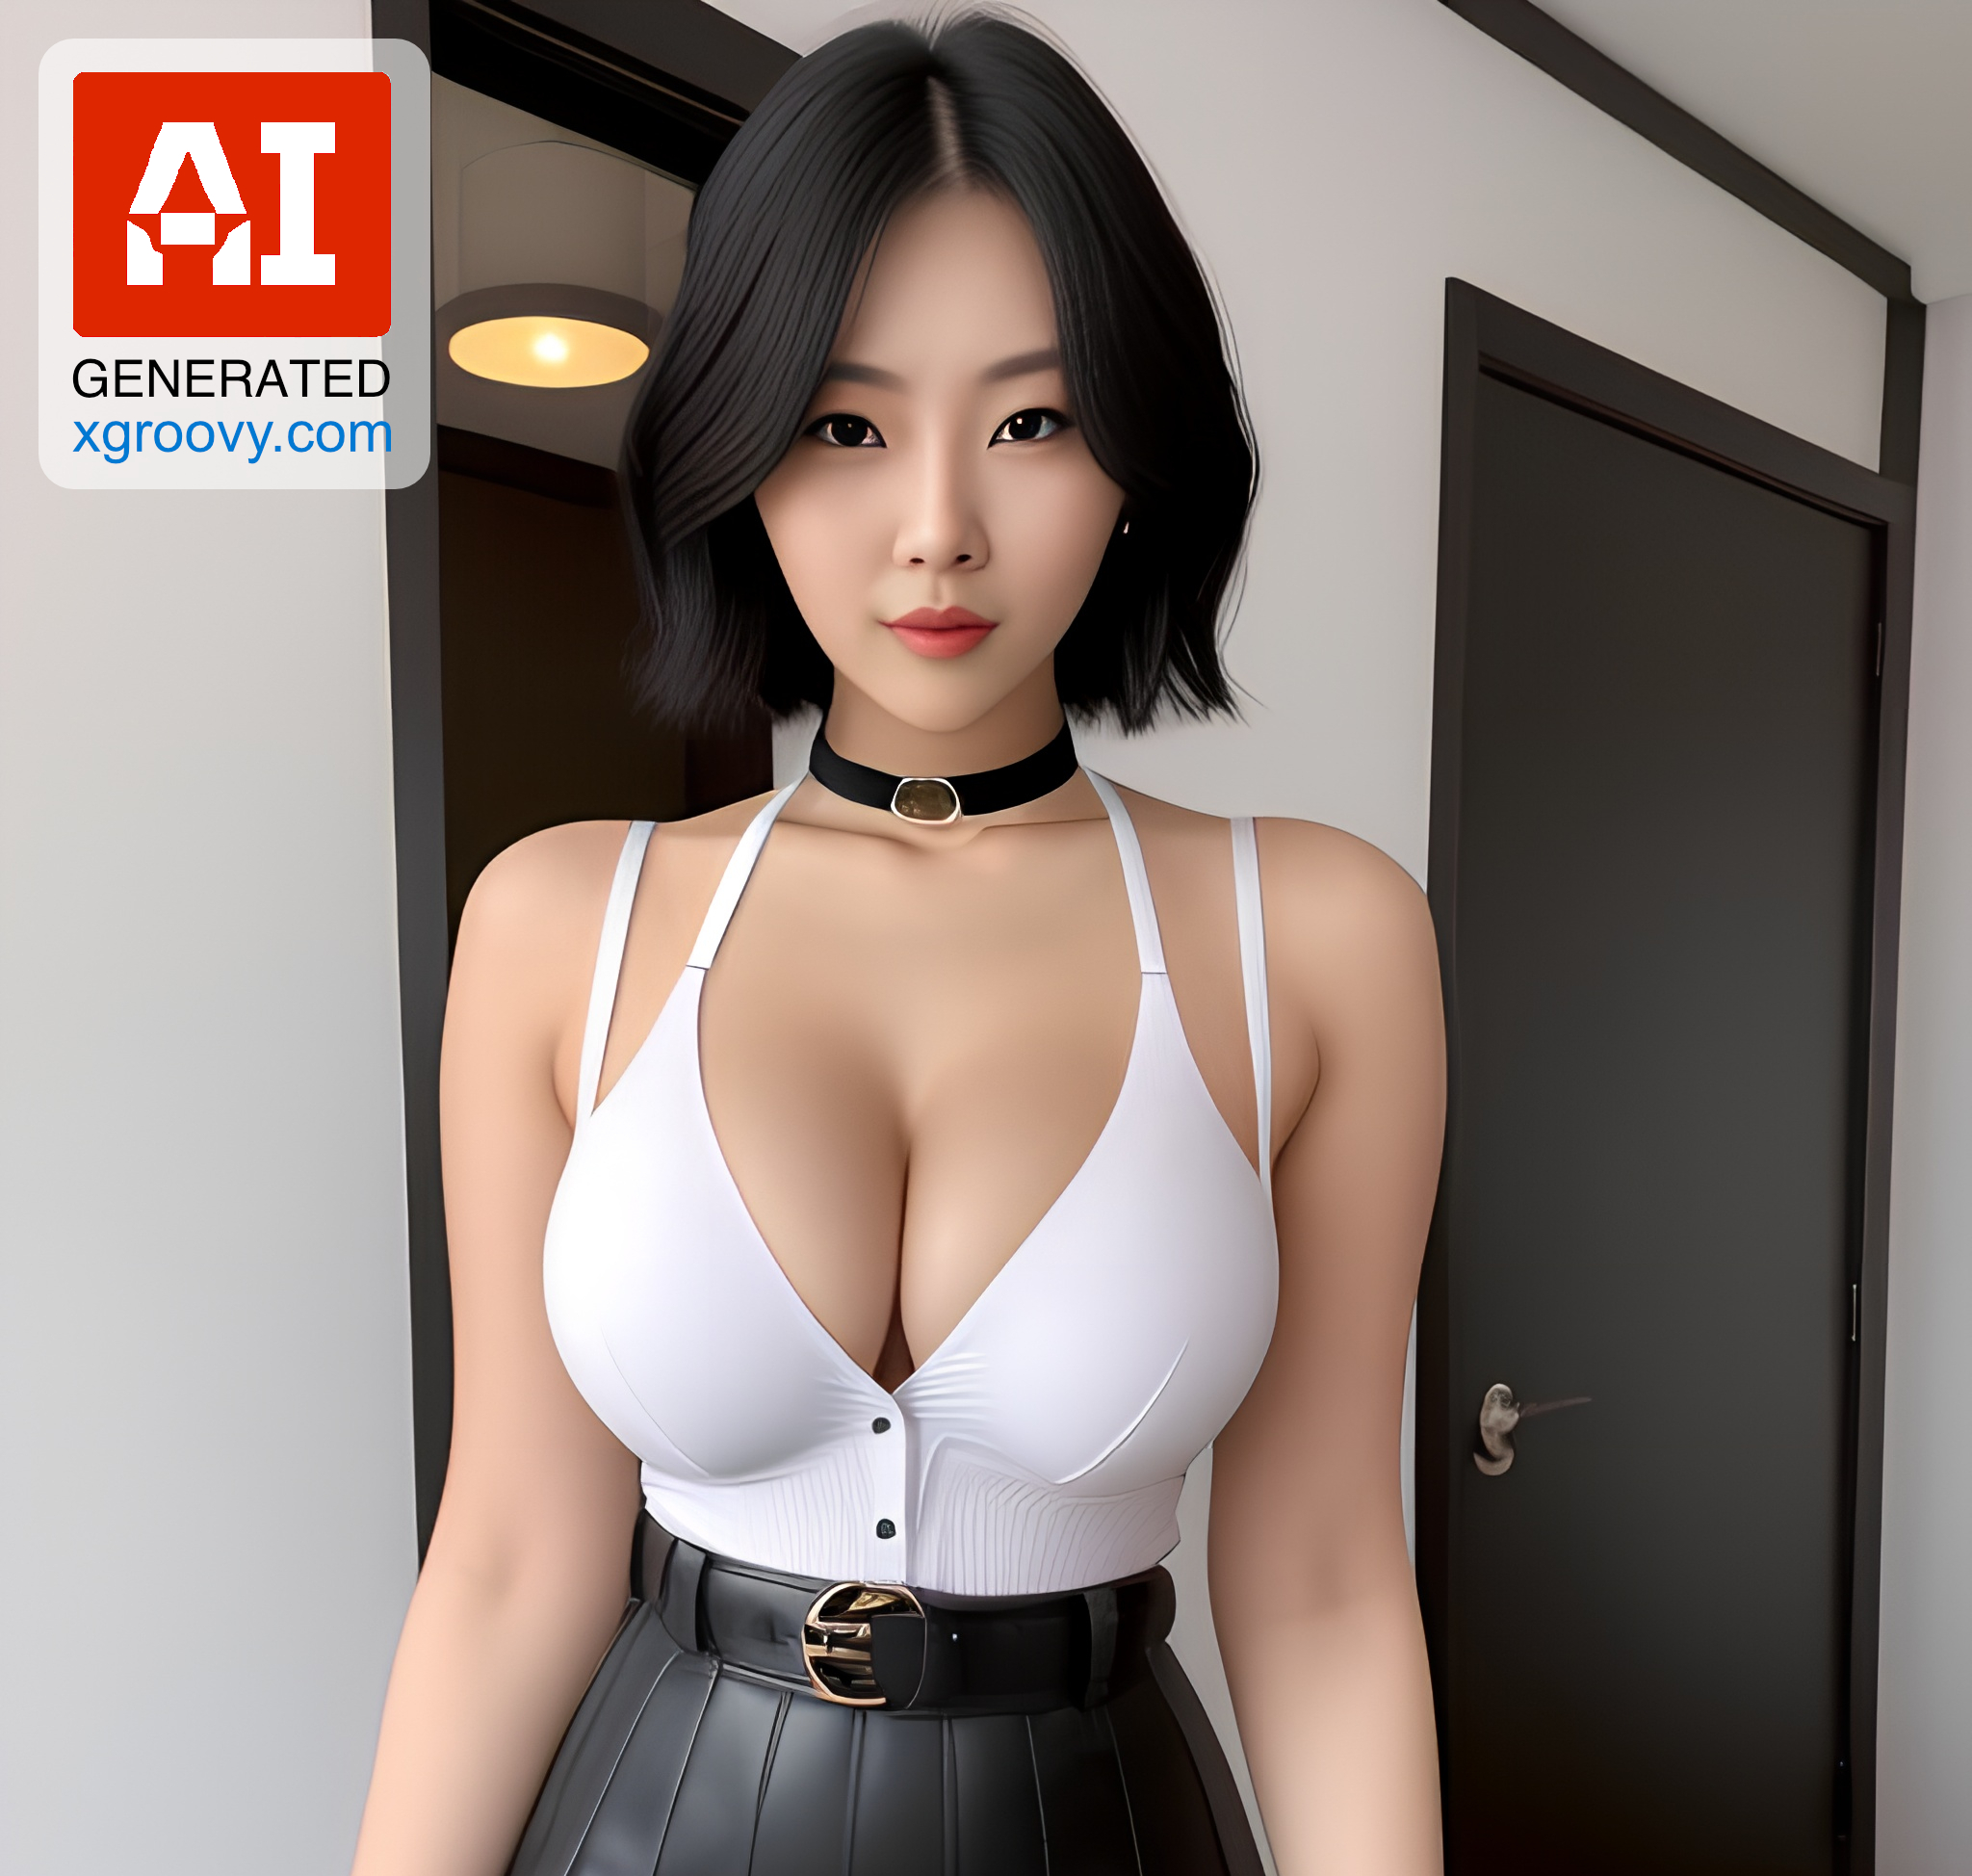 Asian Mini Skirt Bent Over - Korean beauty, short hair, big hips, perfect body in a mini skirt & choker.  I'd